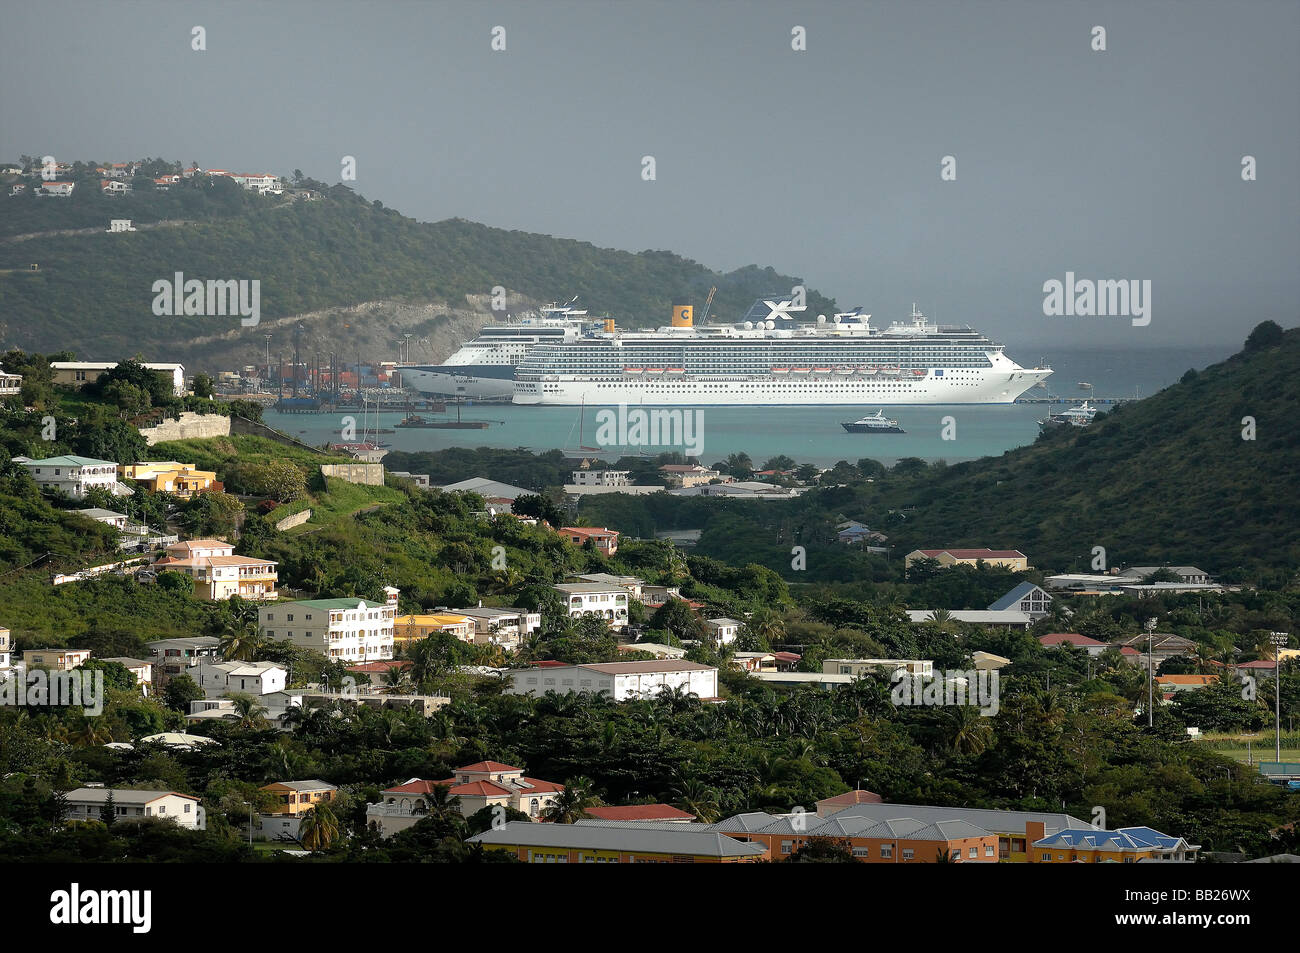 Sint Maarten a Cruise ship in the Bay of Philipsburg Stock Photo